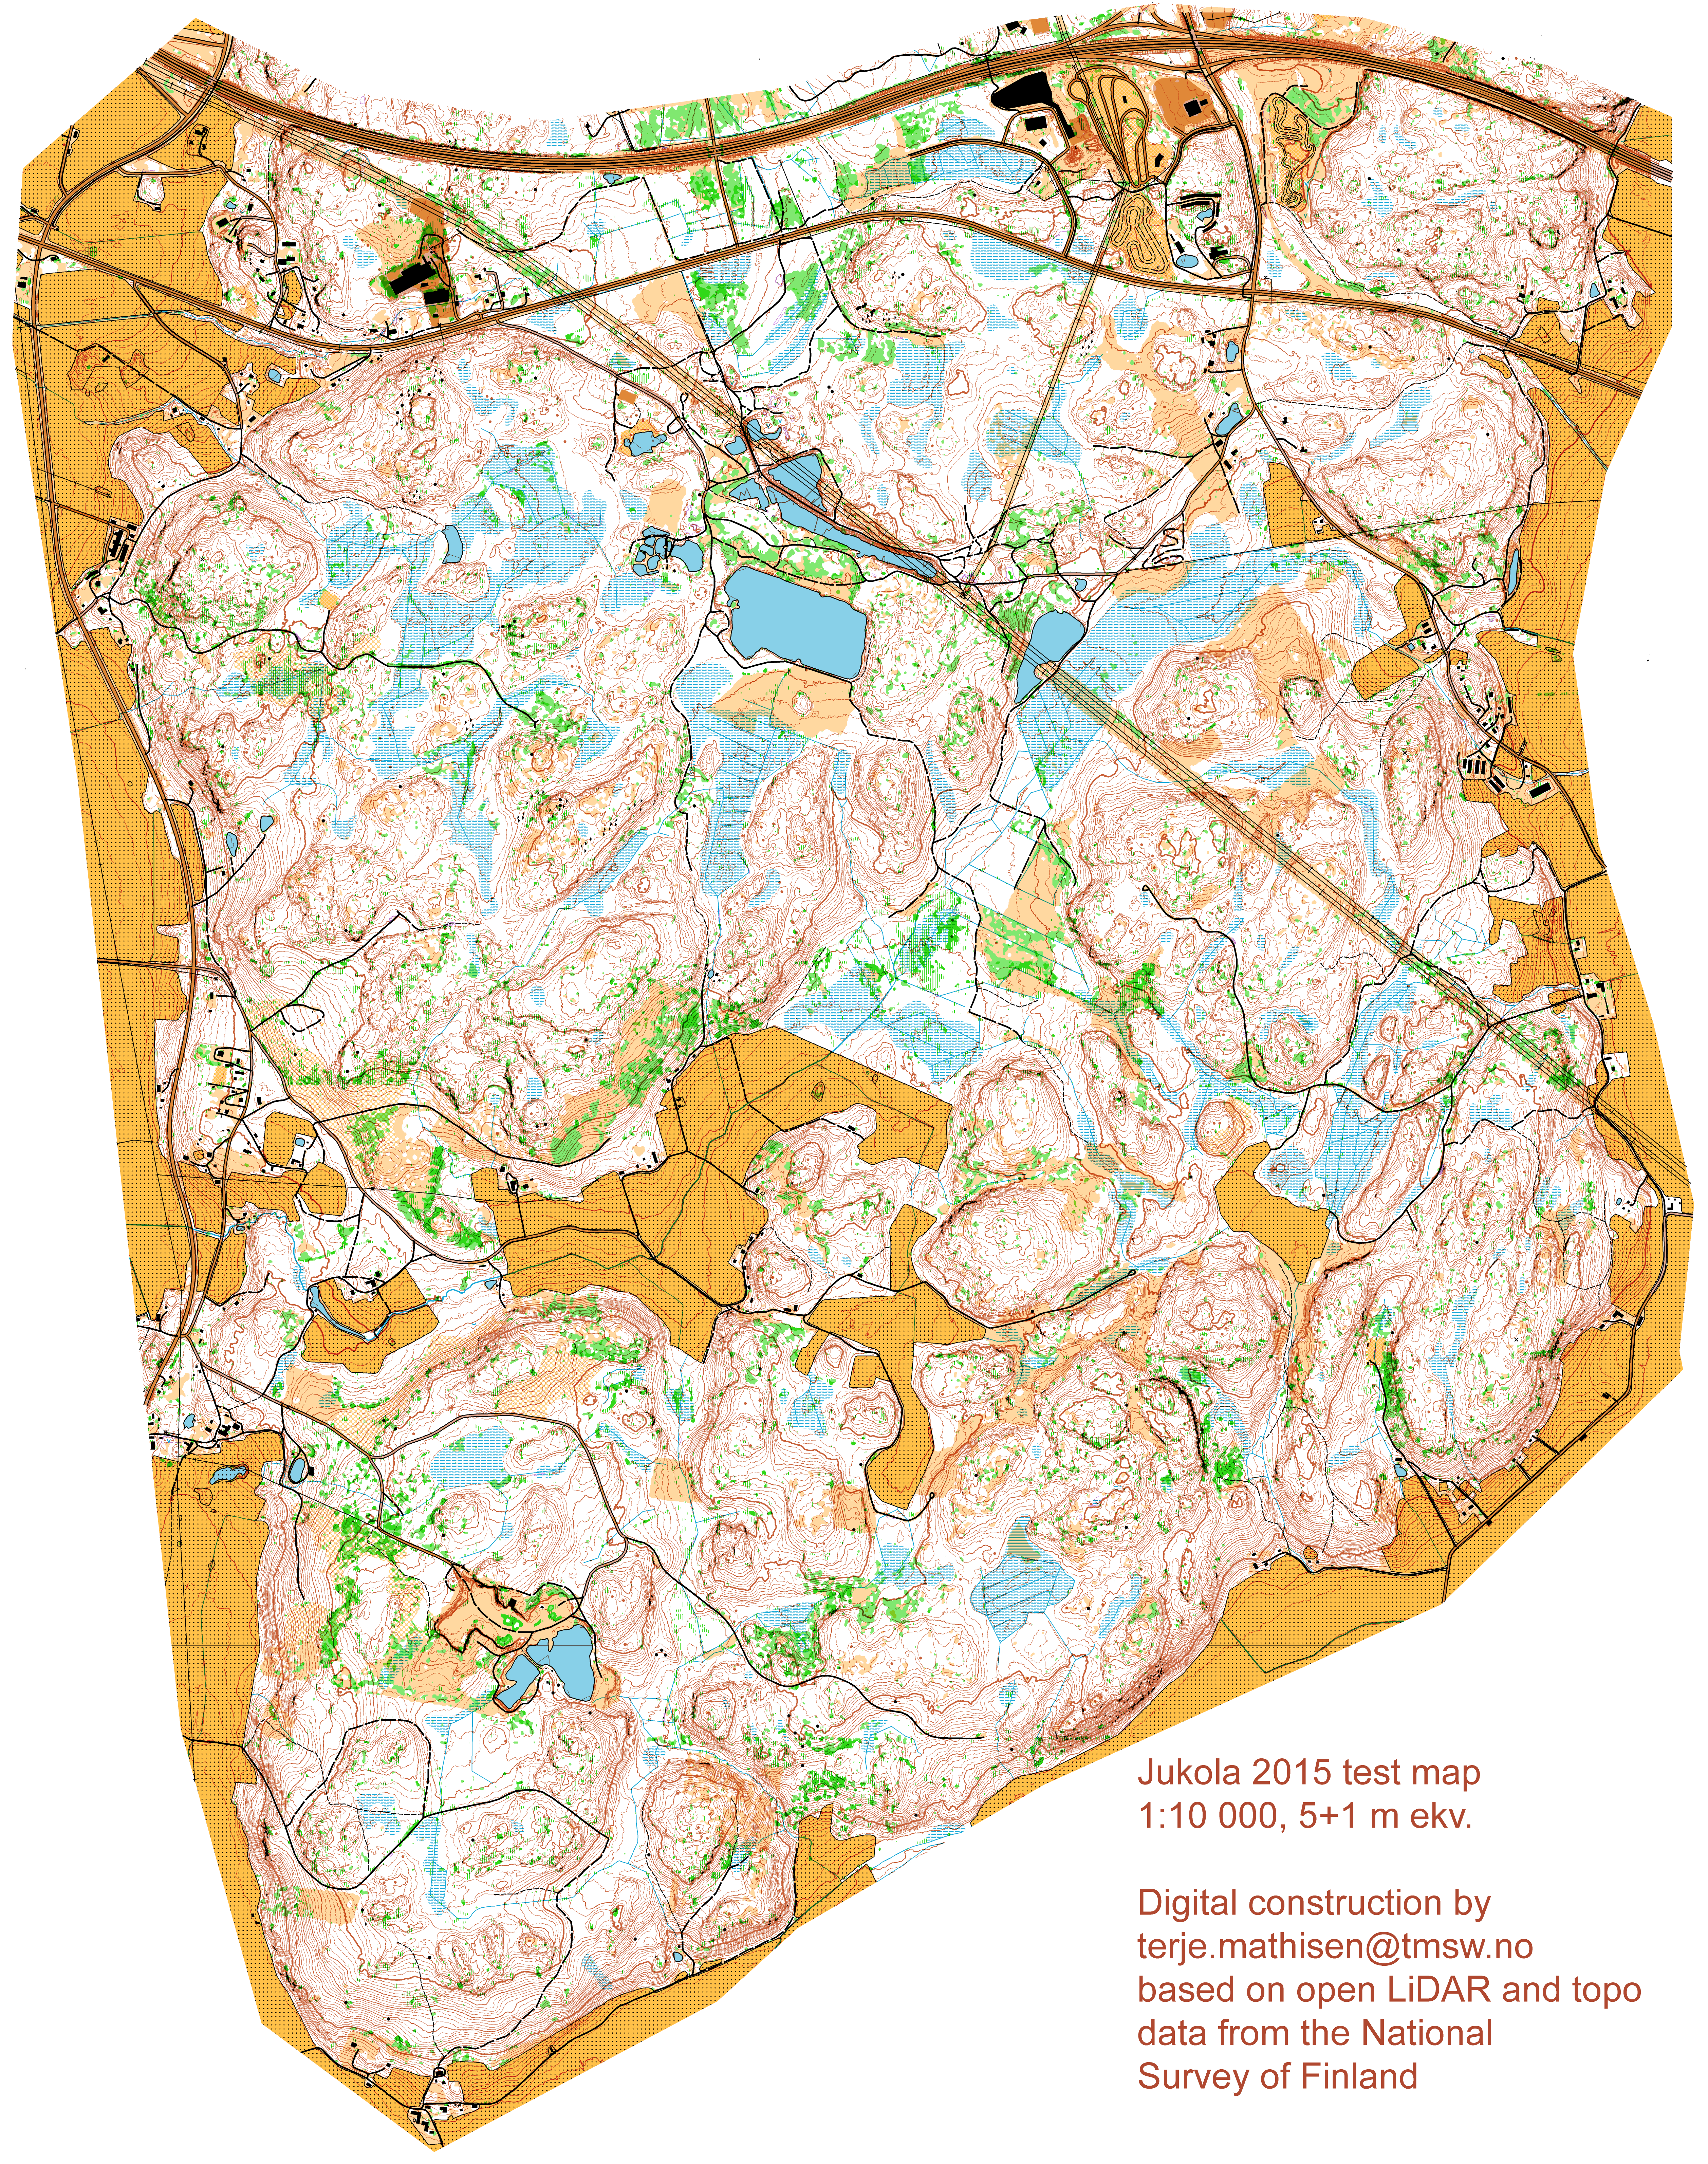 Jukola 2015 test map ver 2 (2014-06-19)